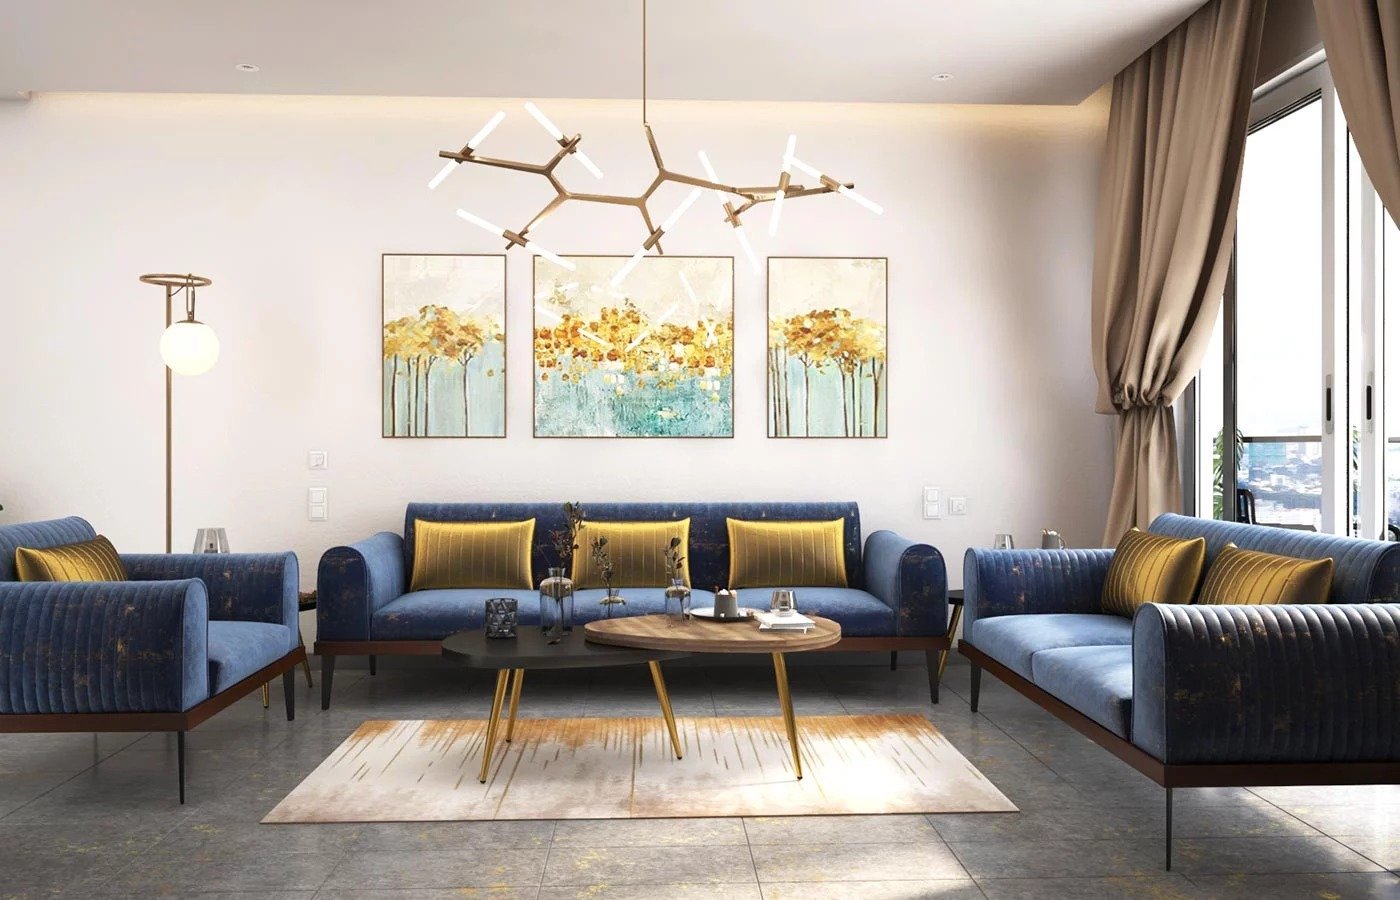 Joyline Sofa Set by Profine - Infuse joy and vibrancy into your living room.